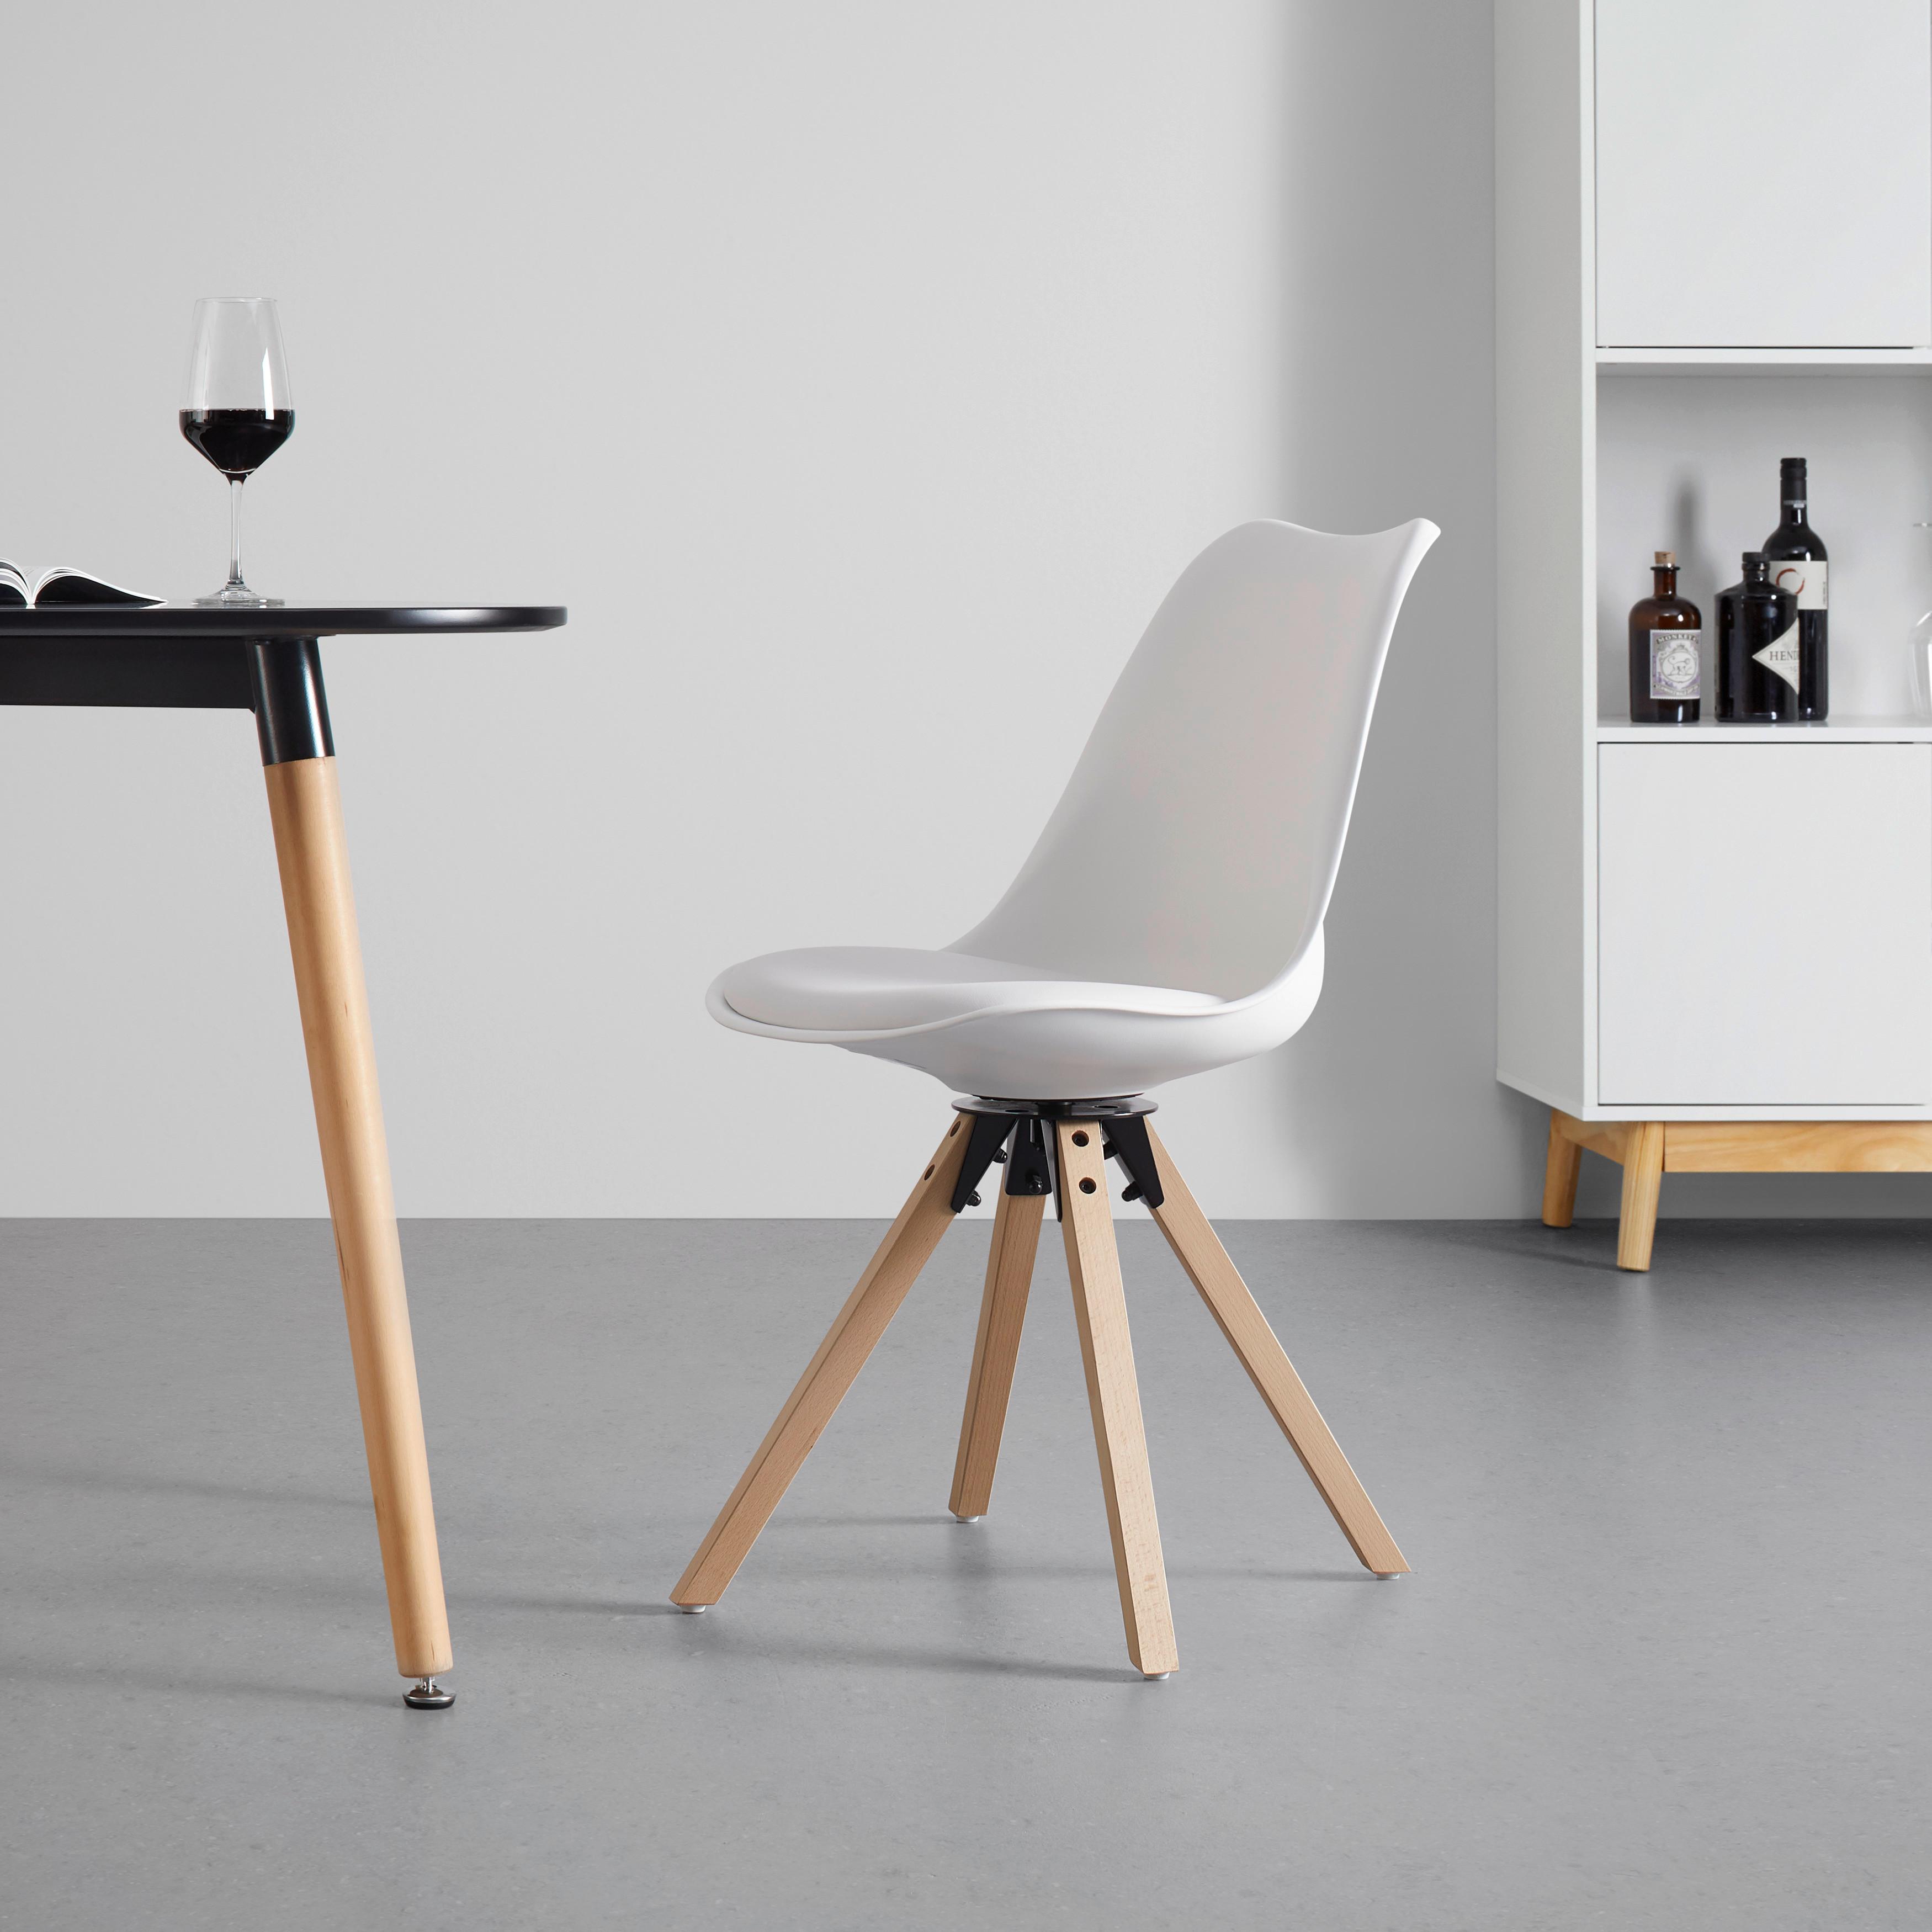 Stuhl "Ricky 2", drehbar, weiß, Echtholz Beine - Buchefarben/Weiß, MODERN, Holz/Kunststoff (56/85/49cm) - Bessagi Home